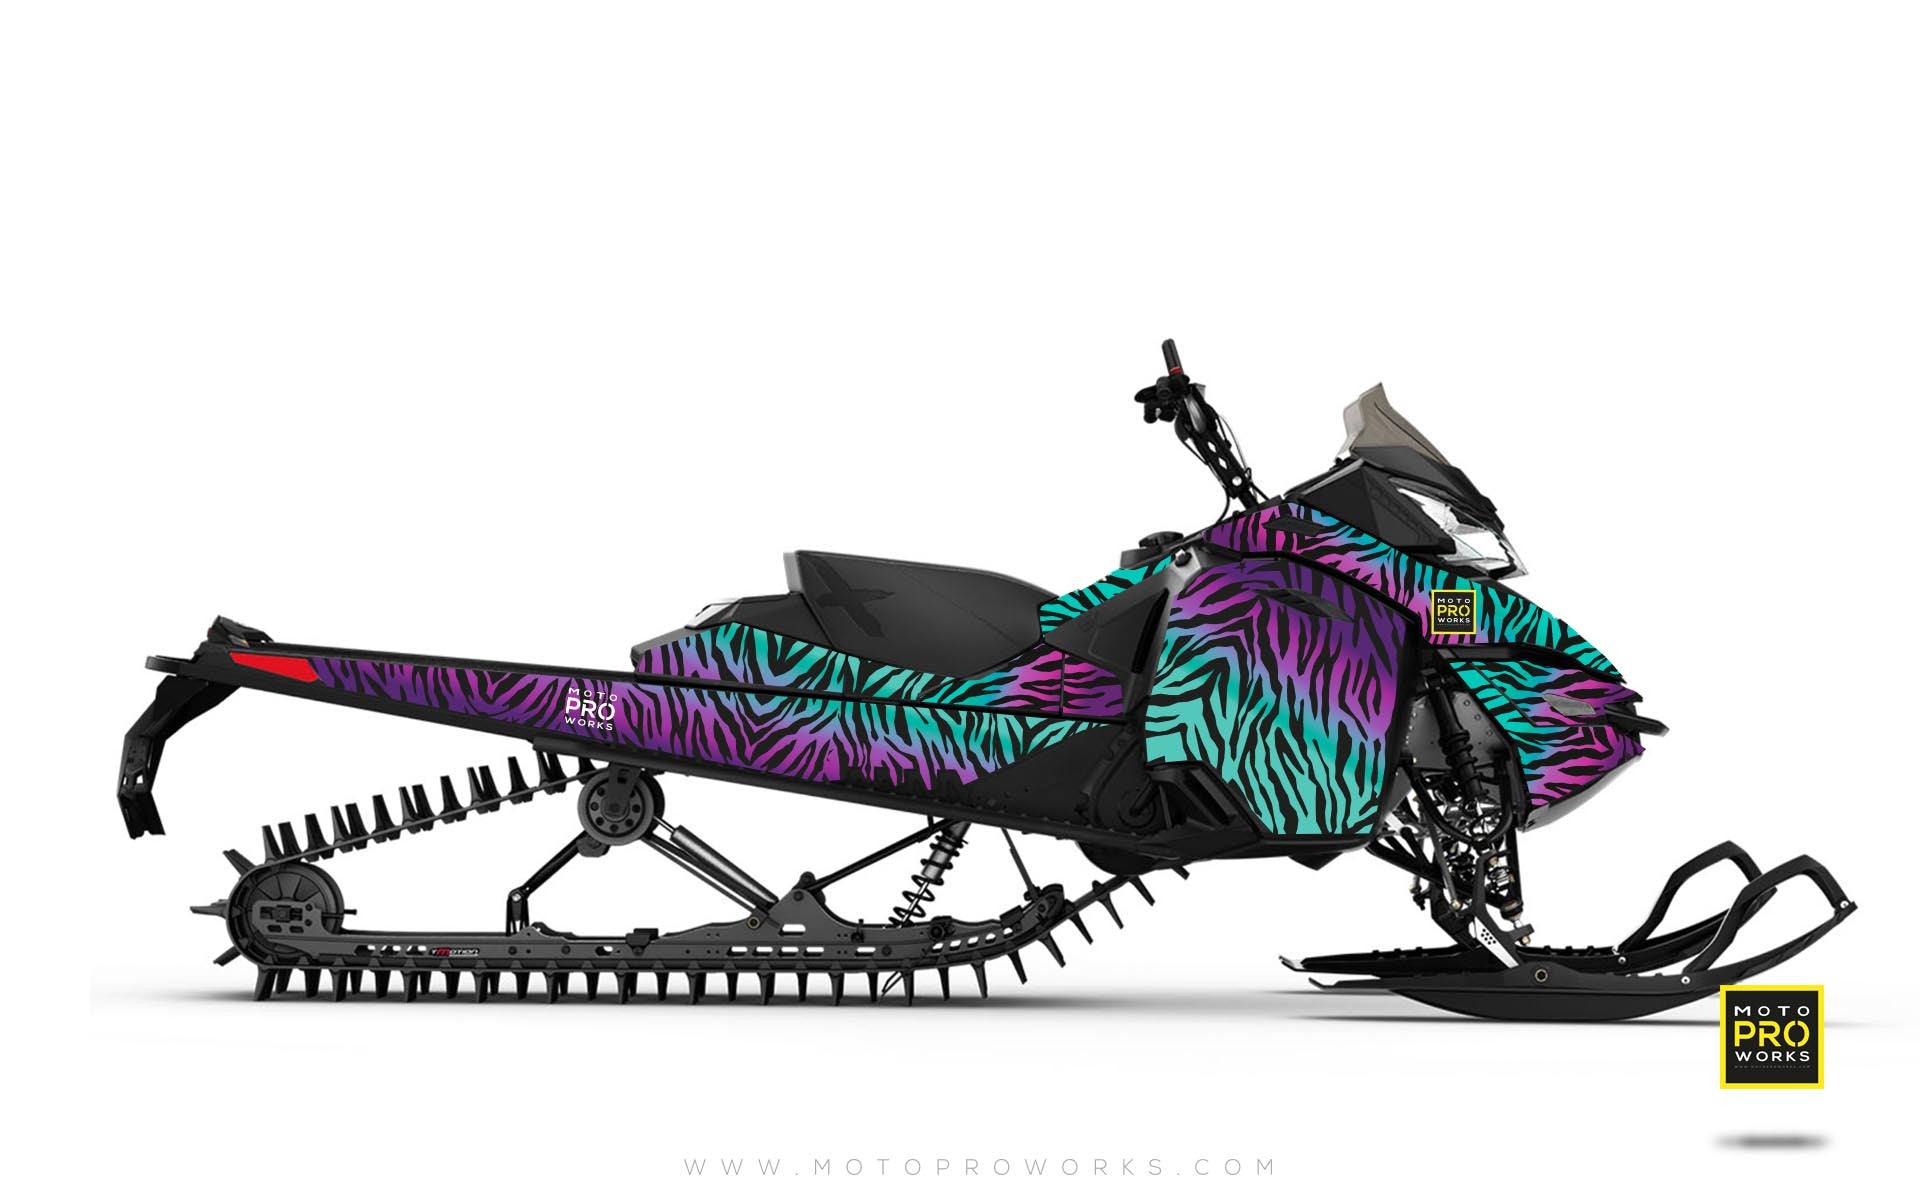 Ski-Doo Graphics - "Stripey" (solid purple) - MotoProWorks | Decals and Bike Graphic kit